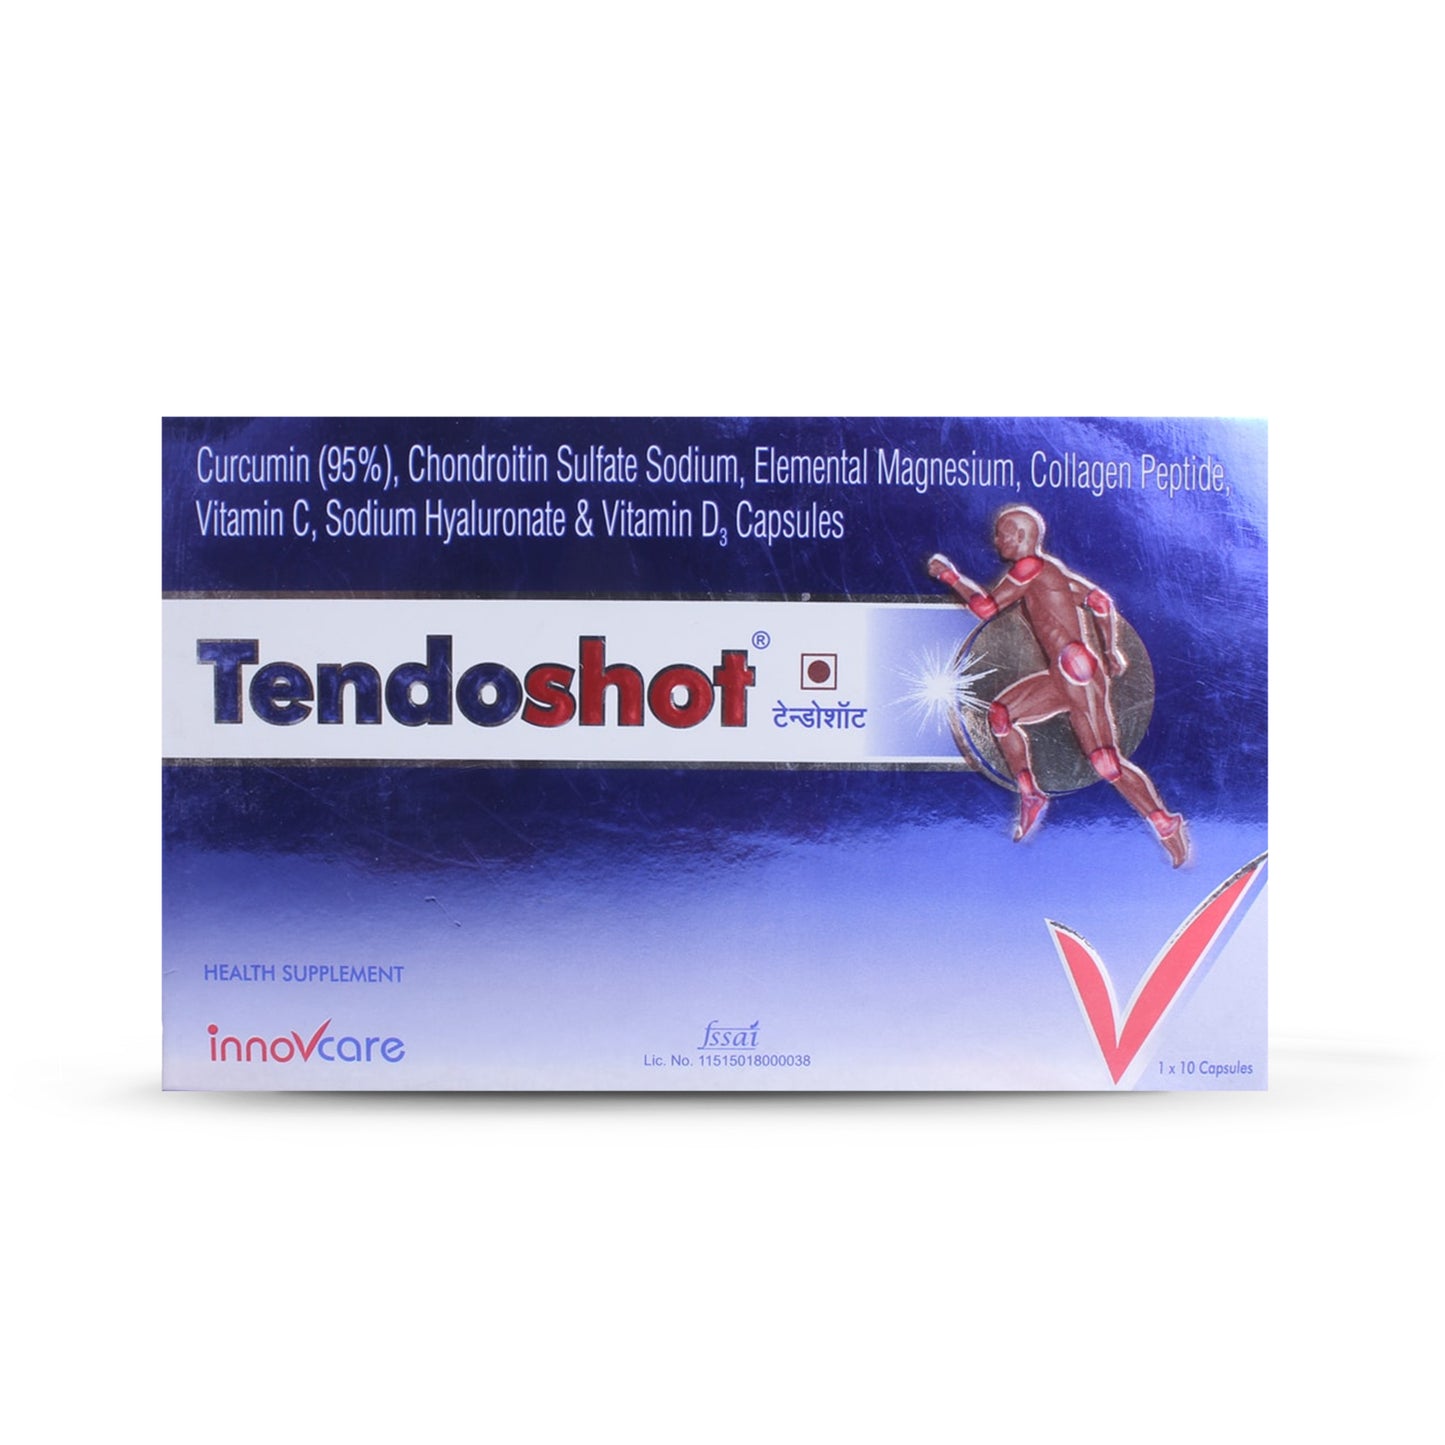 Innovcare's Tendoshot, 10 Capsules